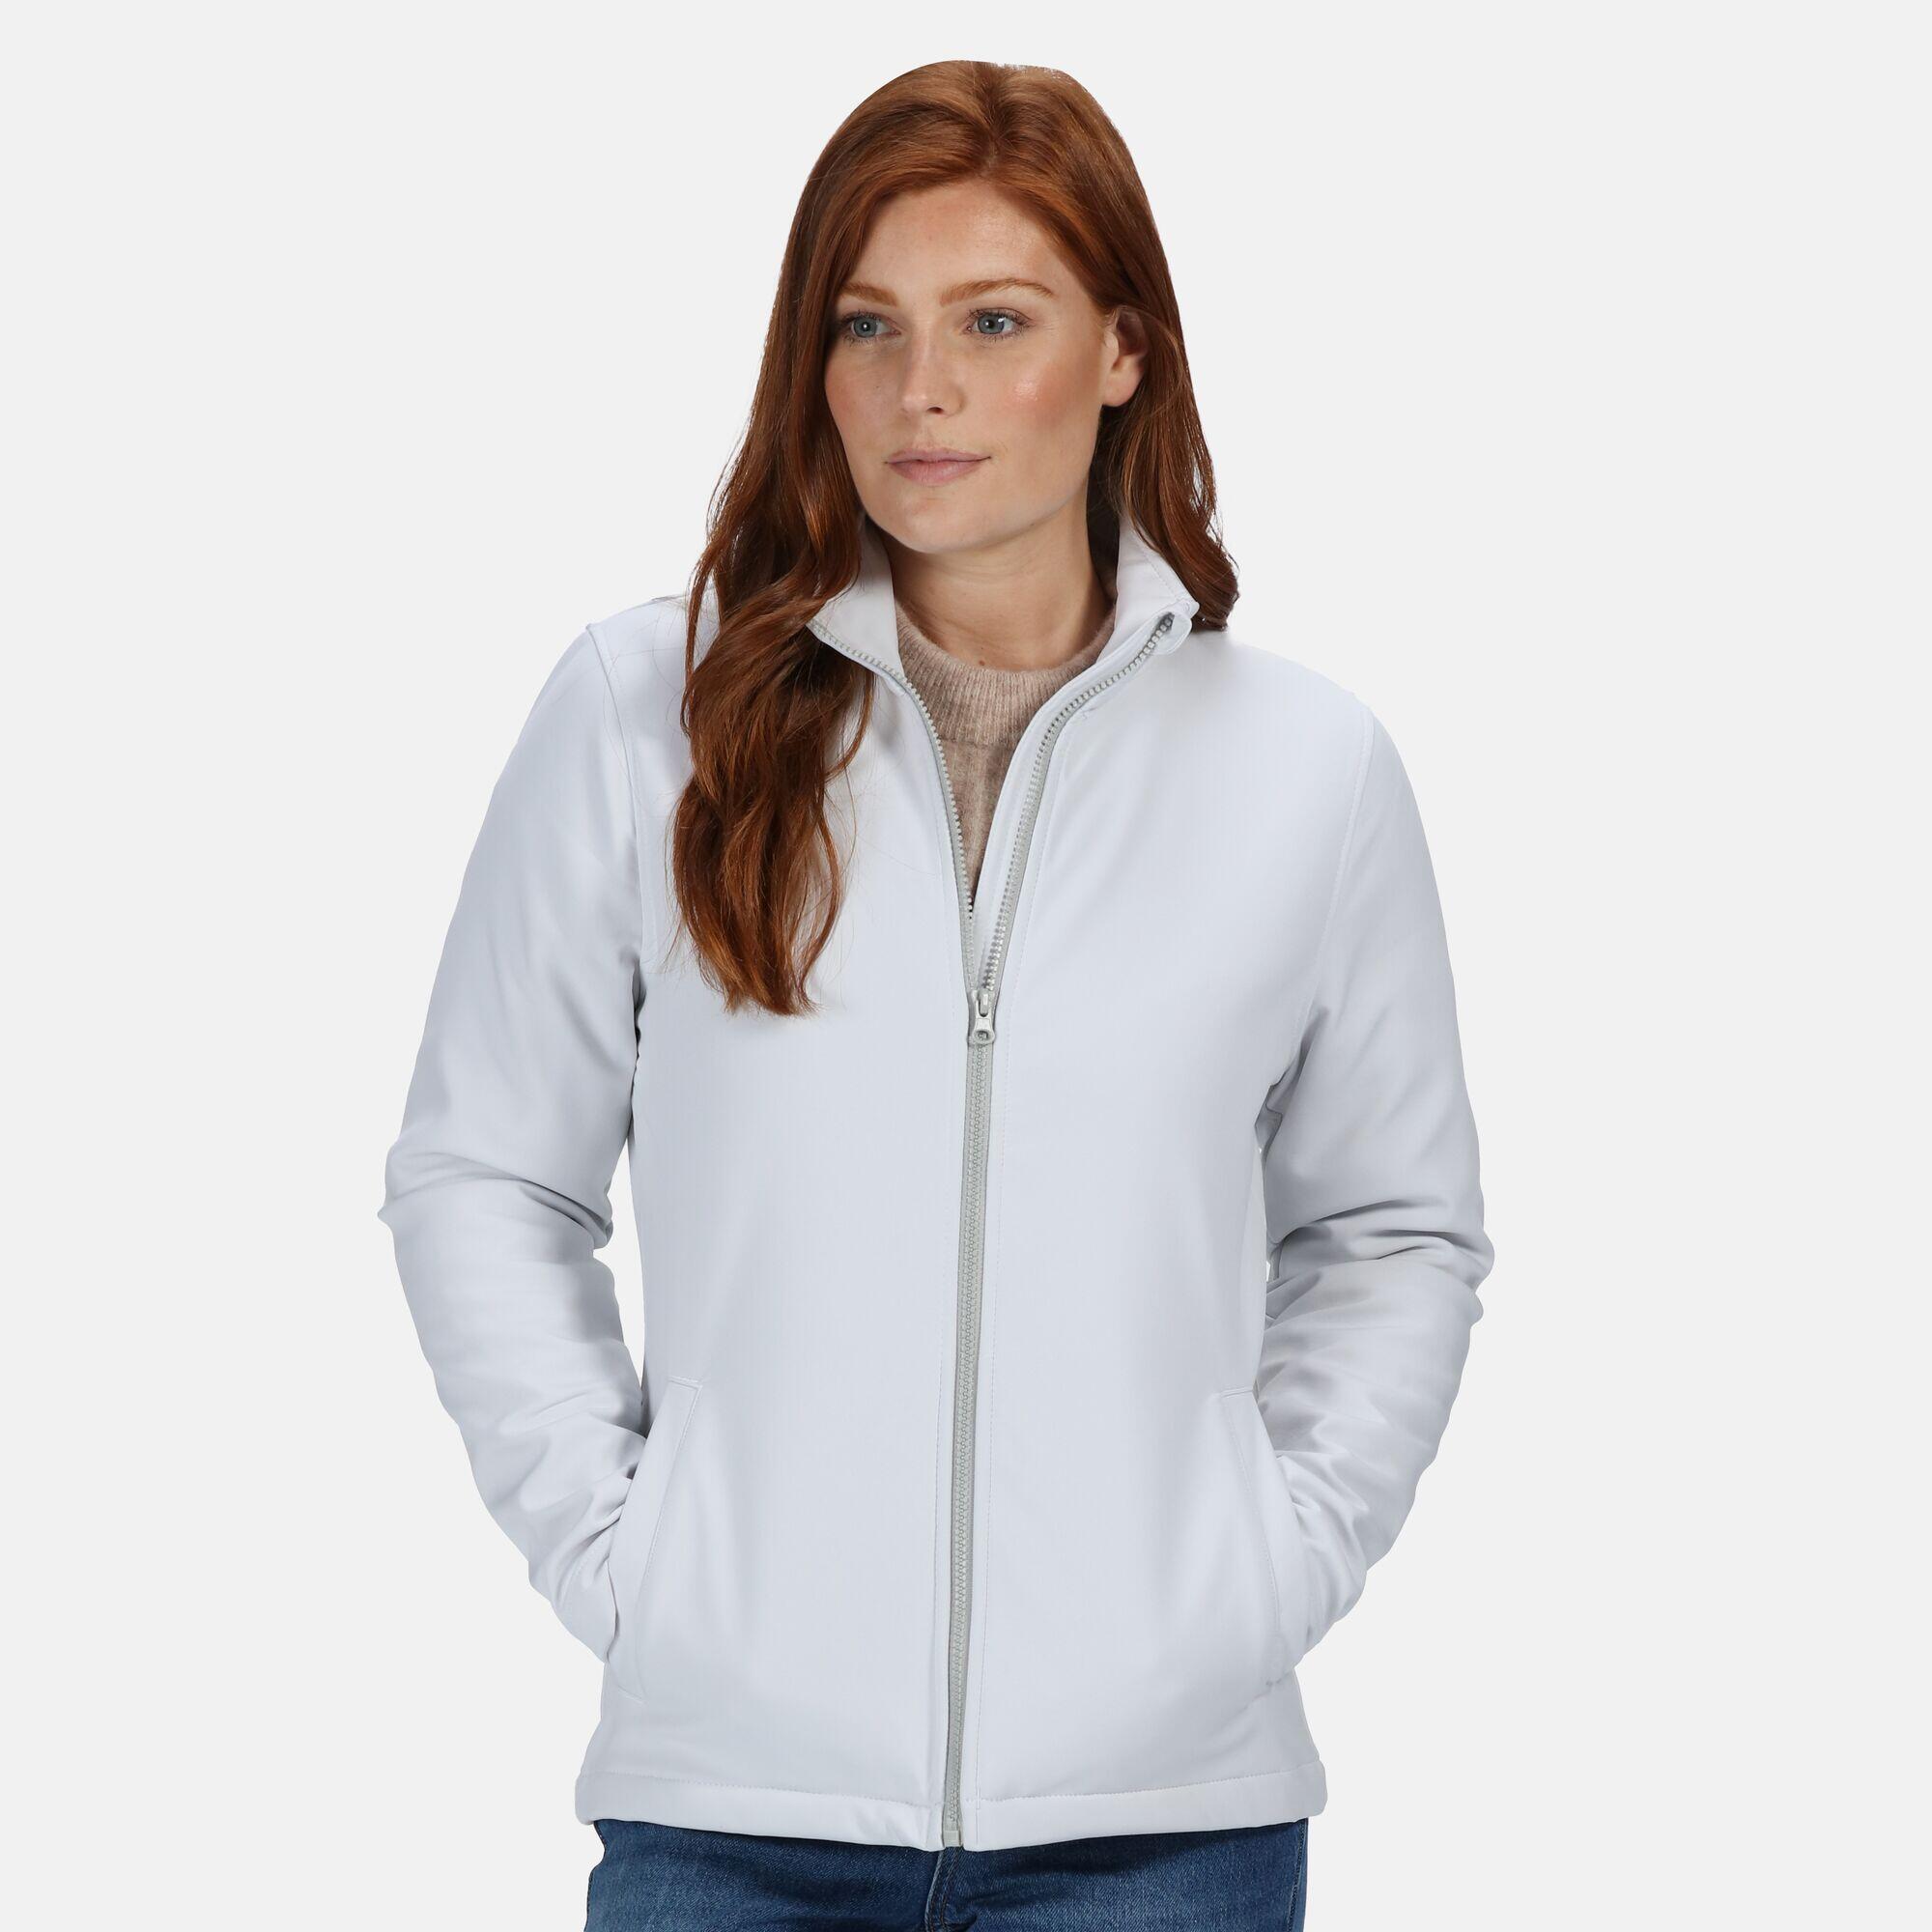 Womens/Ladies Ablaze Printable Softshell Jacket (White/Light Steel) 2/4